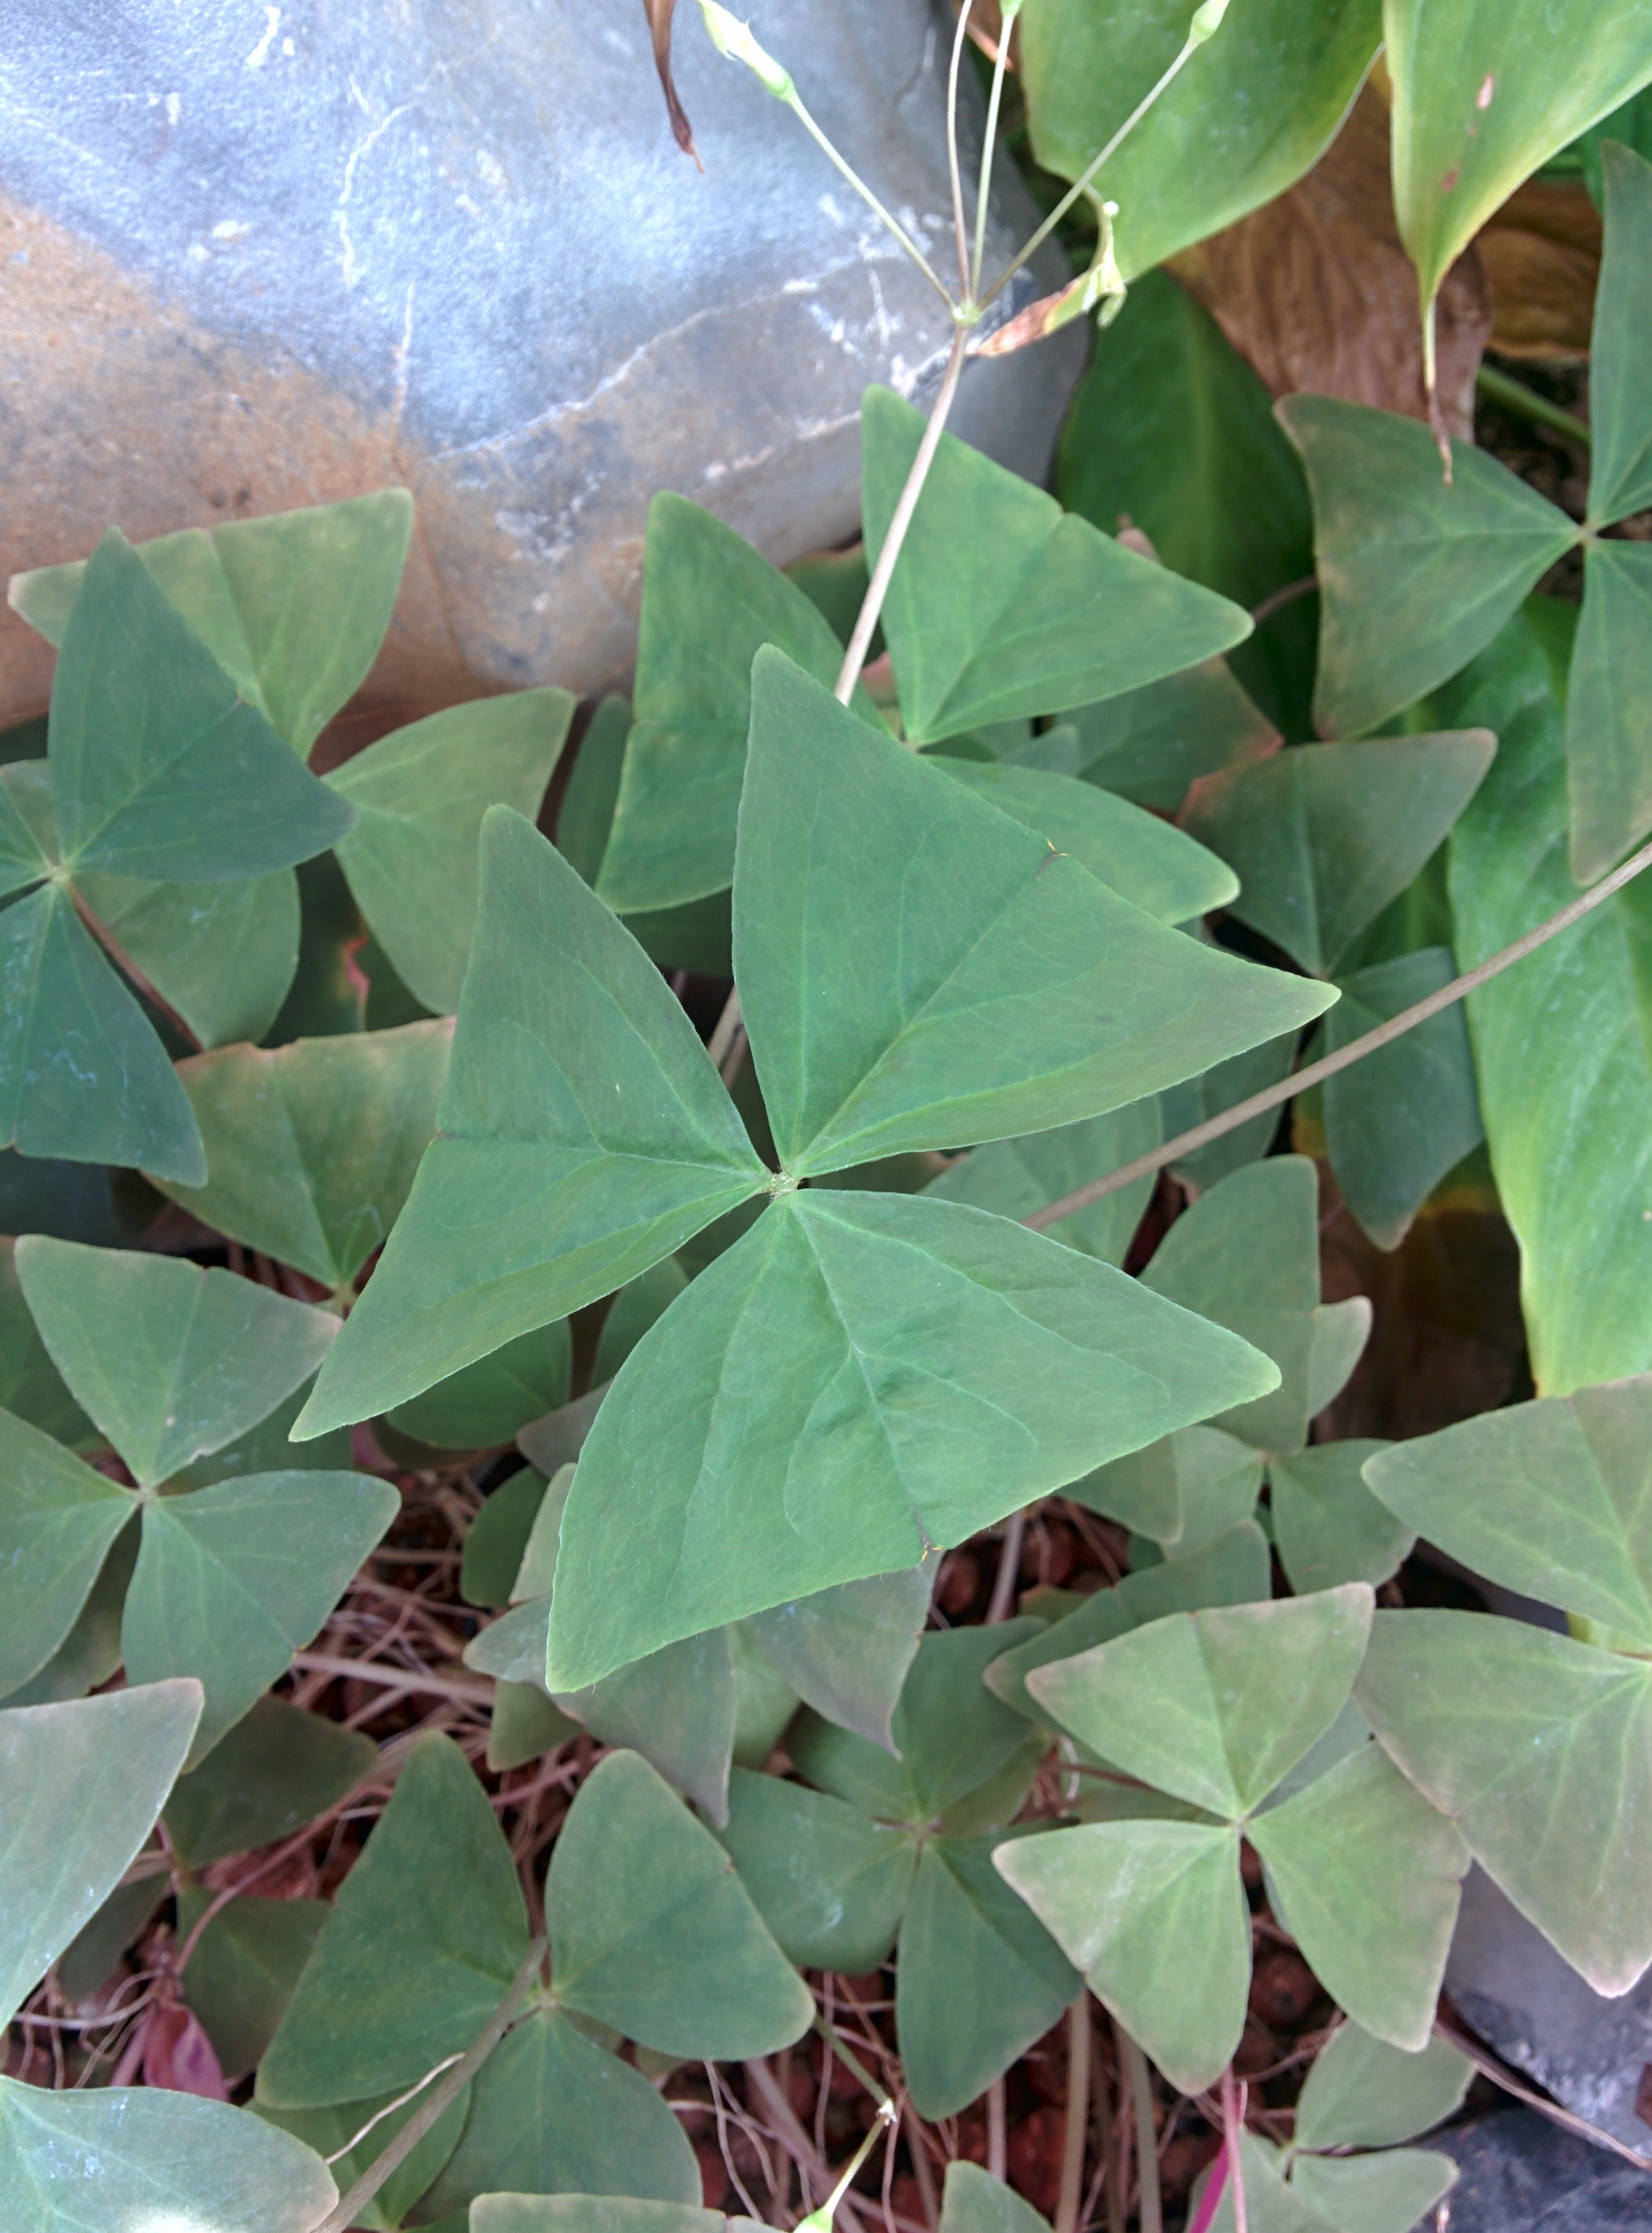 IMG_20151201_122531.jpg 하얀색 꽃이 핀 클로버를 닮은 삼각형 잎의 조경식물...사랑초(Oxalis triangularis subsp. papilionacea)